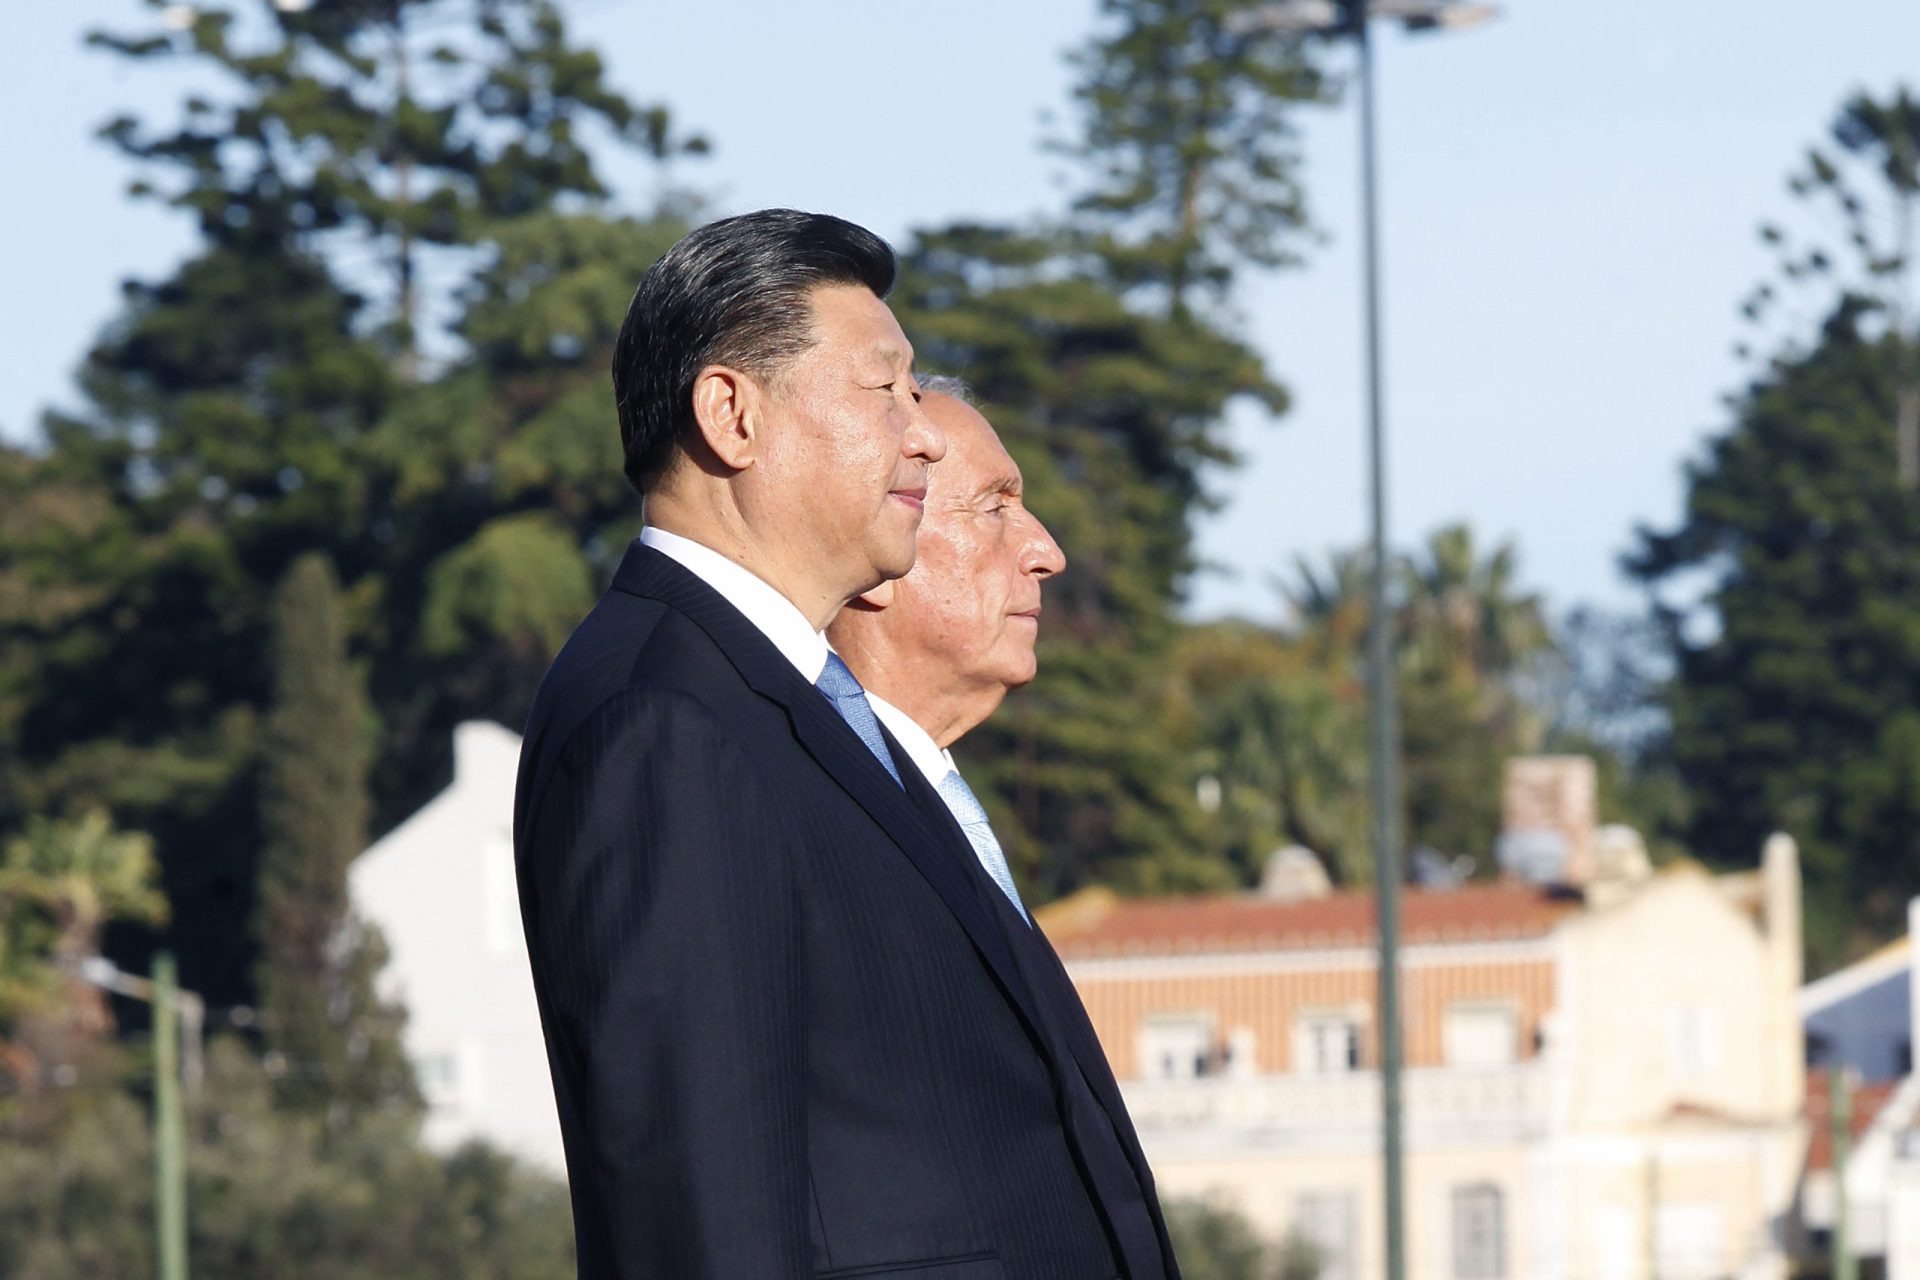 Marcelo recebe Xi Jinping à frente do Mosteiro dos Jerónimos